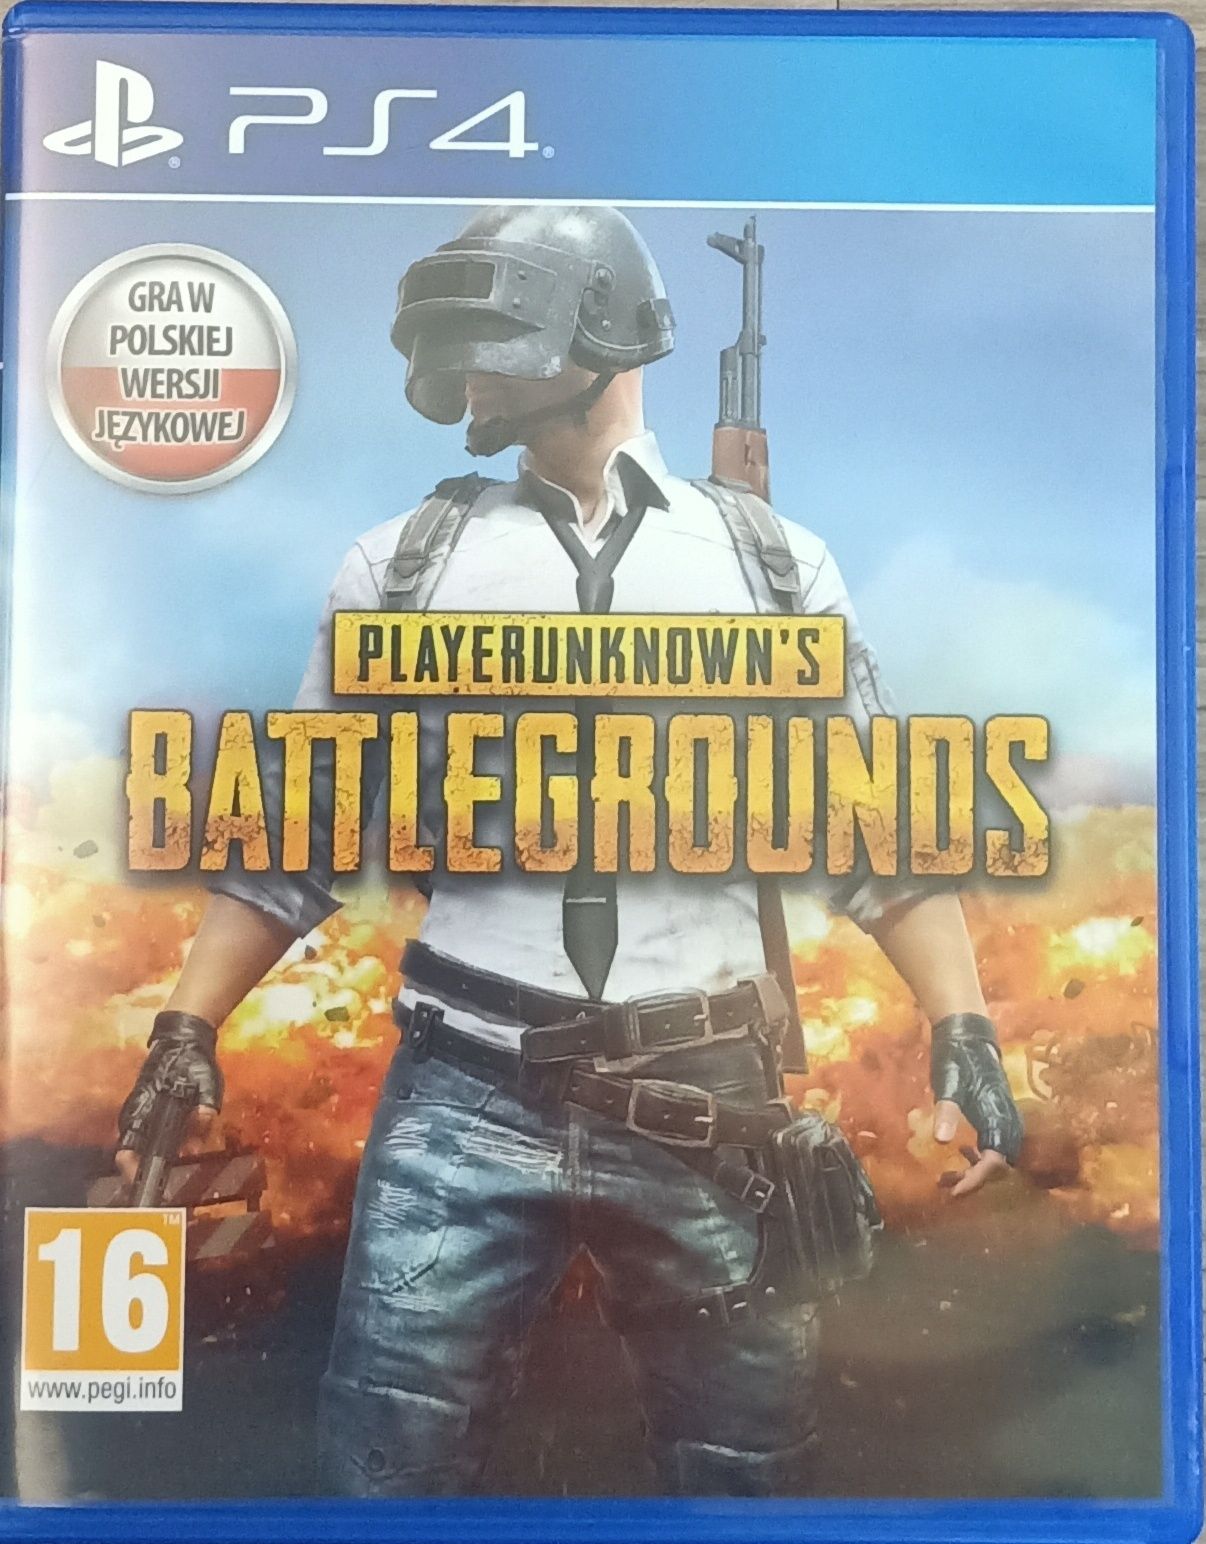 Gra "Playerunknown's Battlegrounds" na PlayStation 4